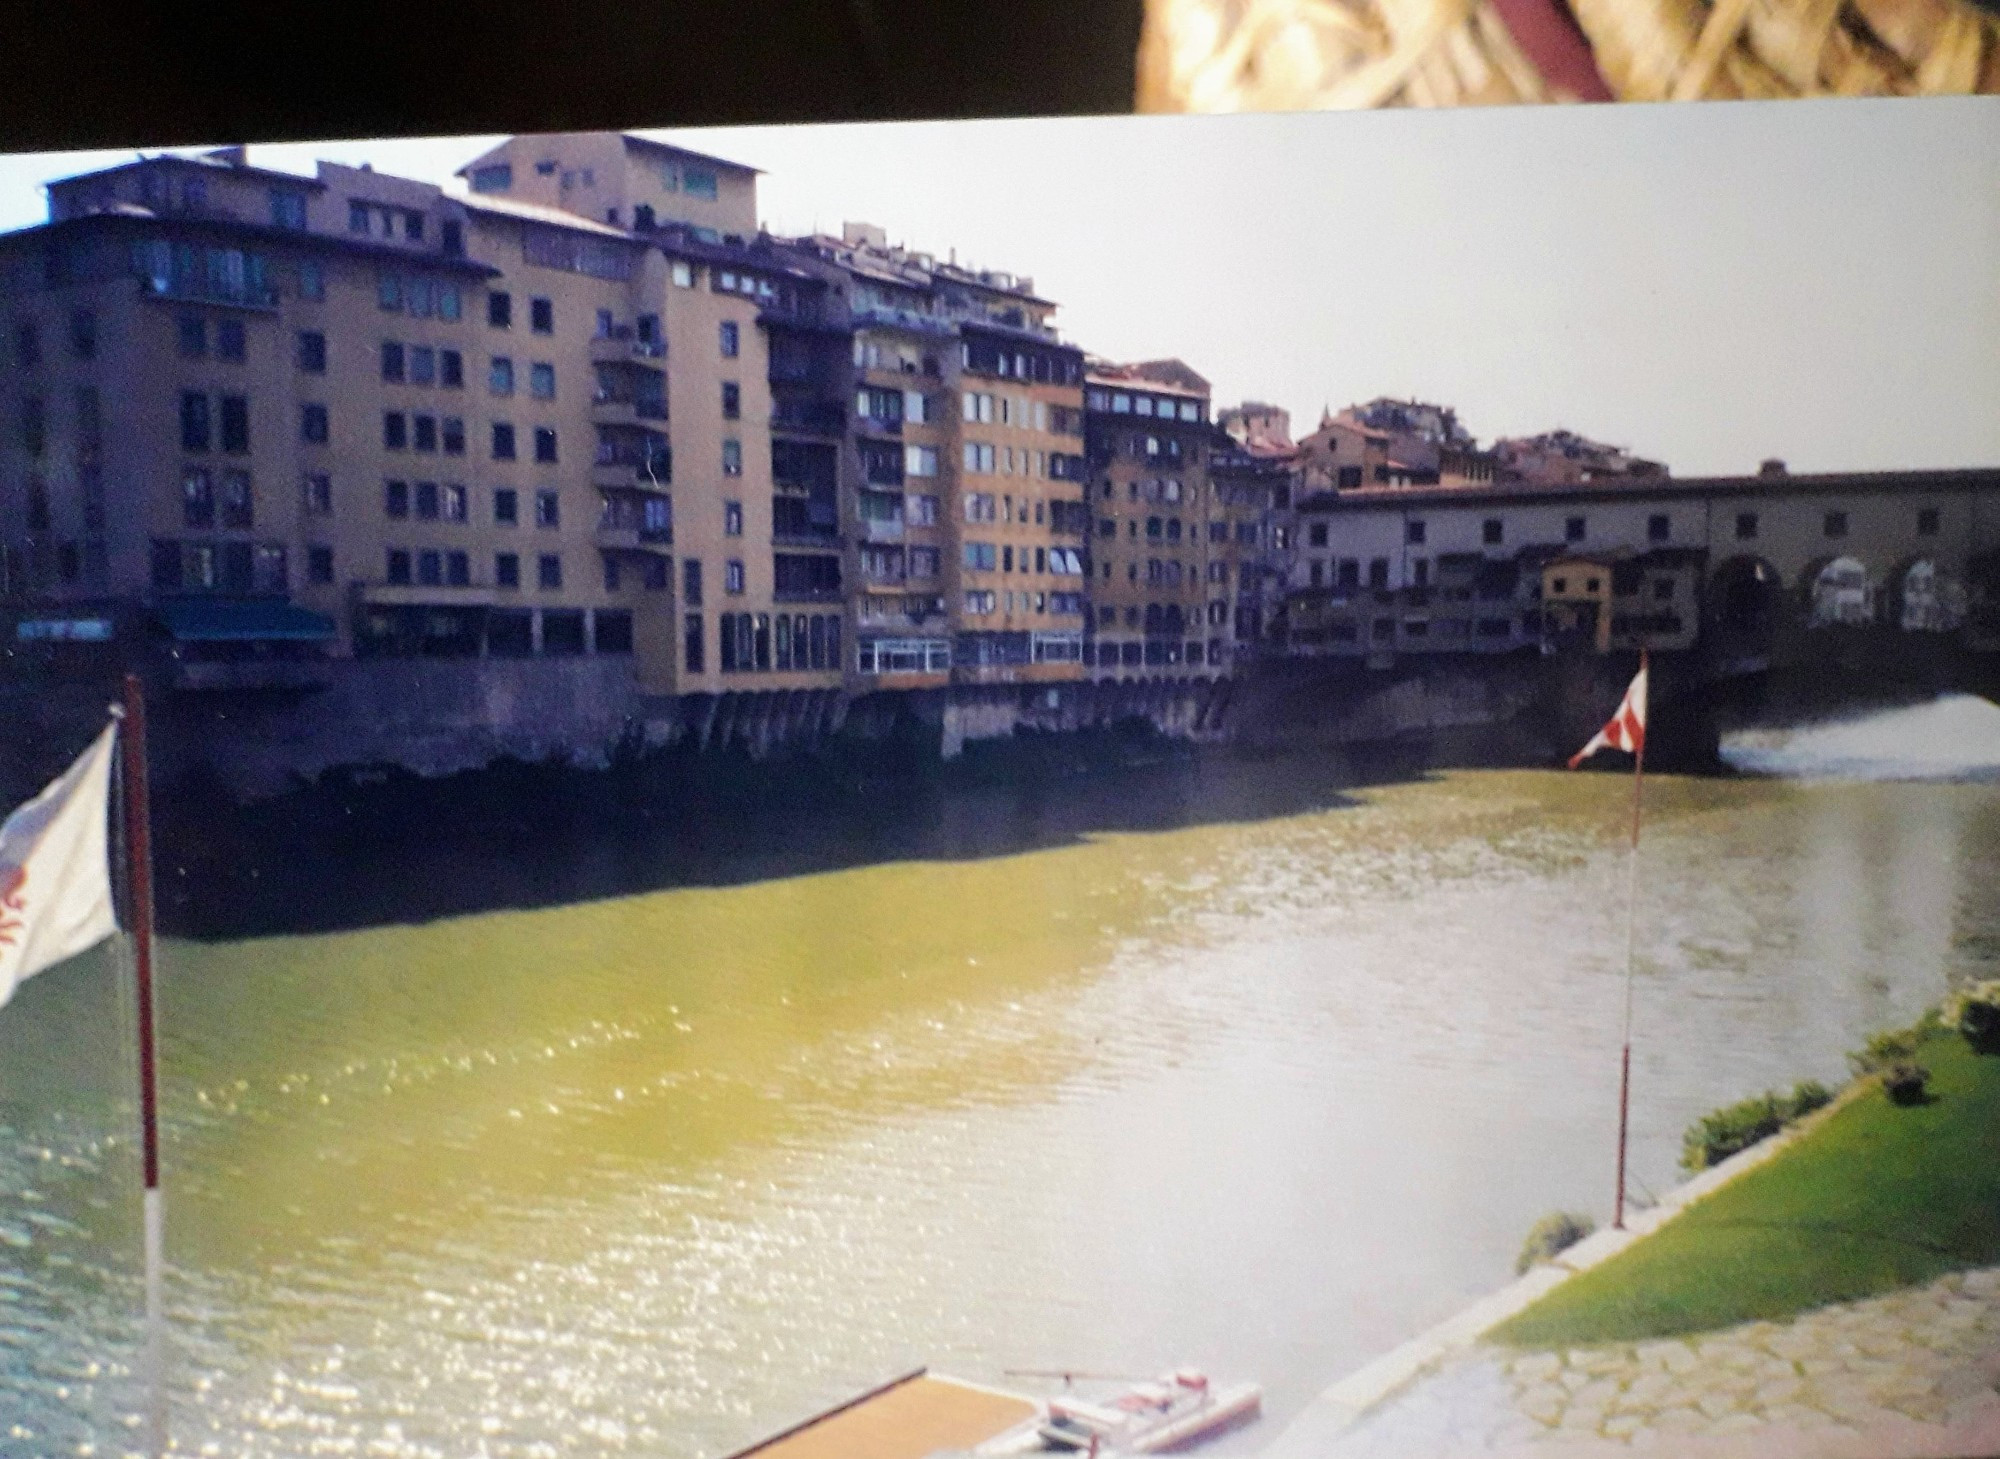 The Arno River and famous Ponte Vecchio Bridge, Florence 